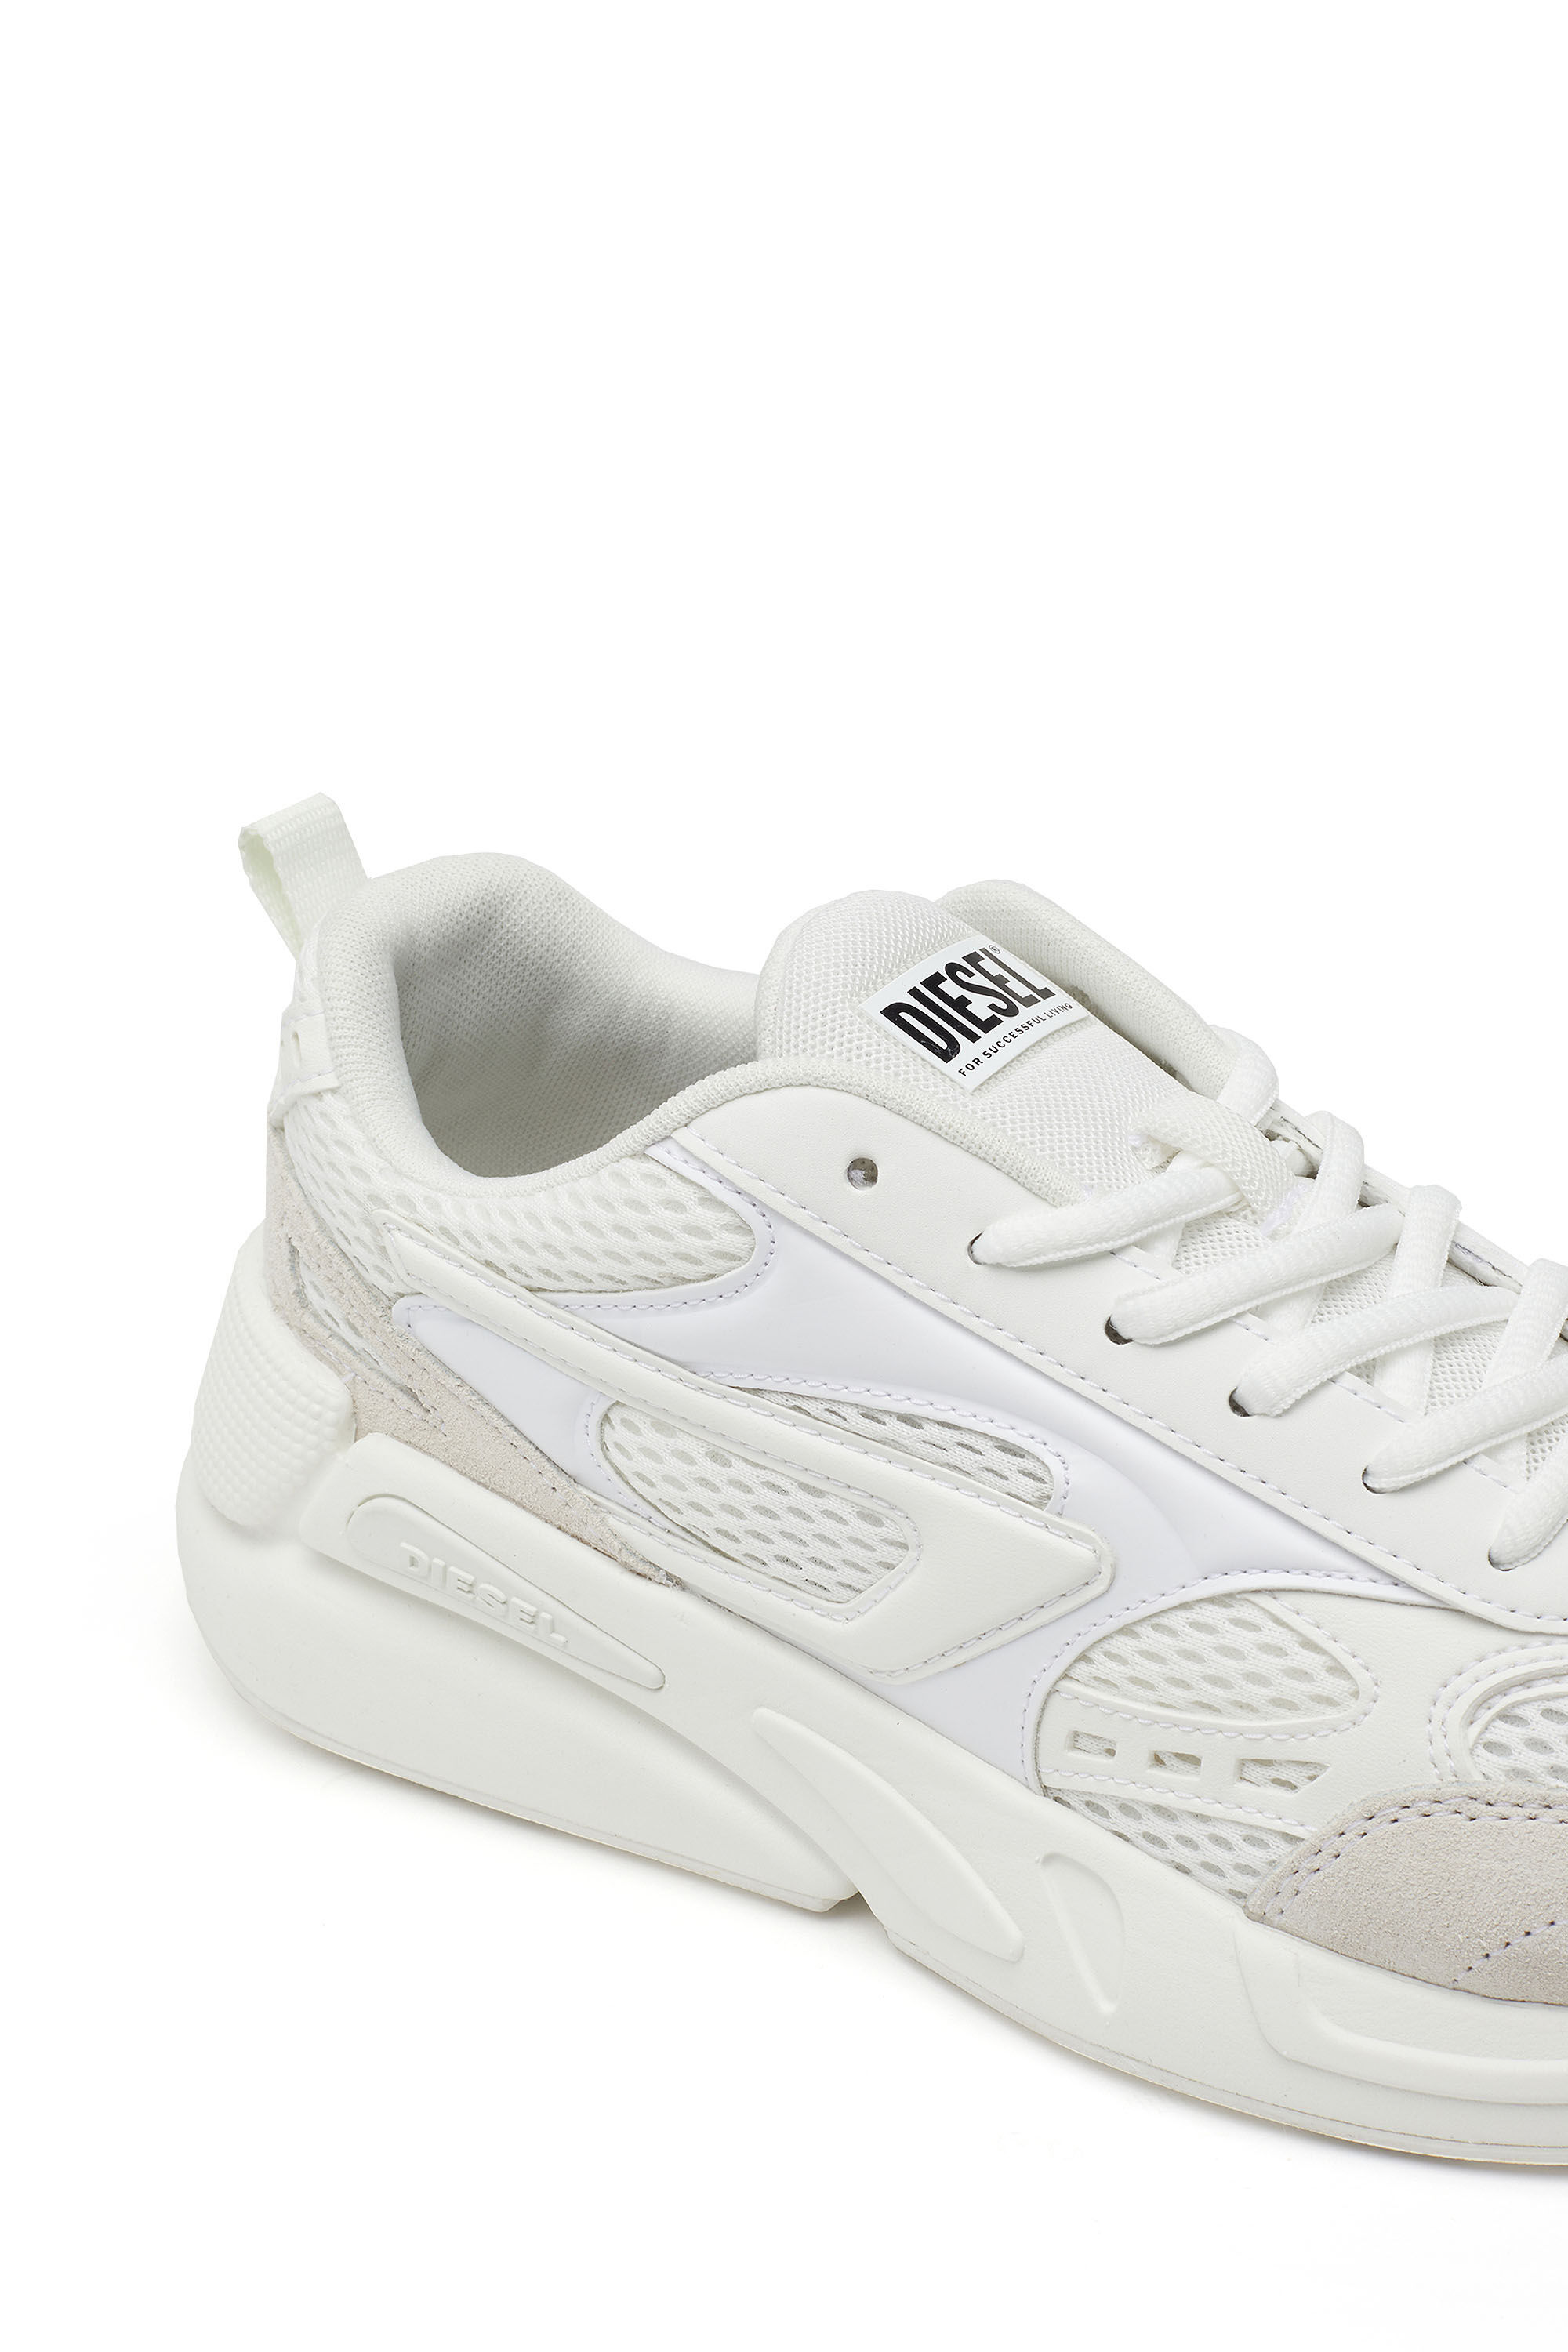 Sneakers in mesh and suede | White | Diesel